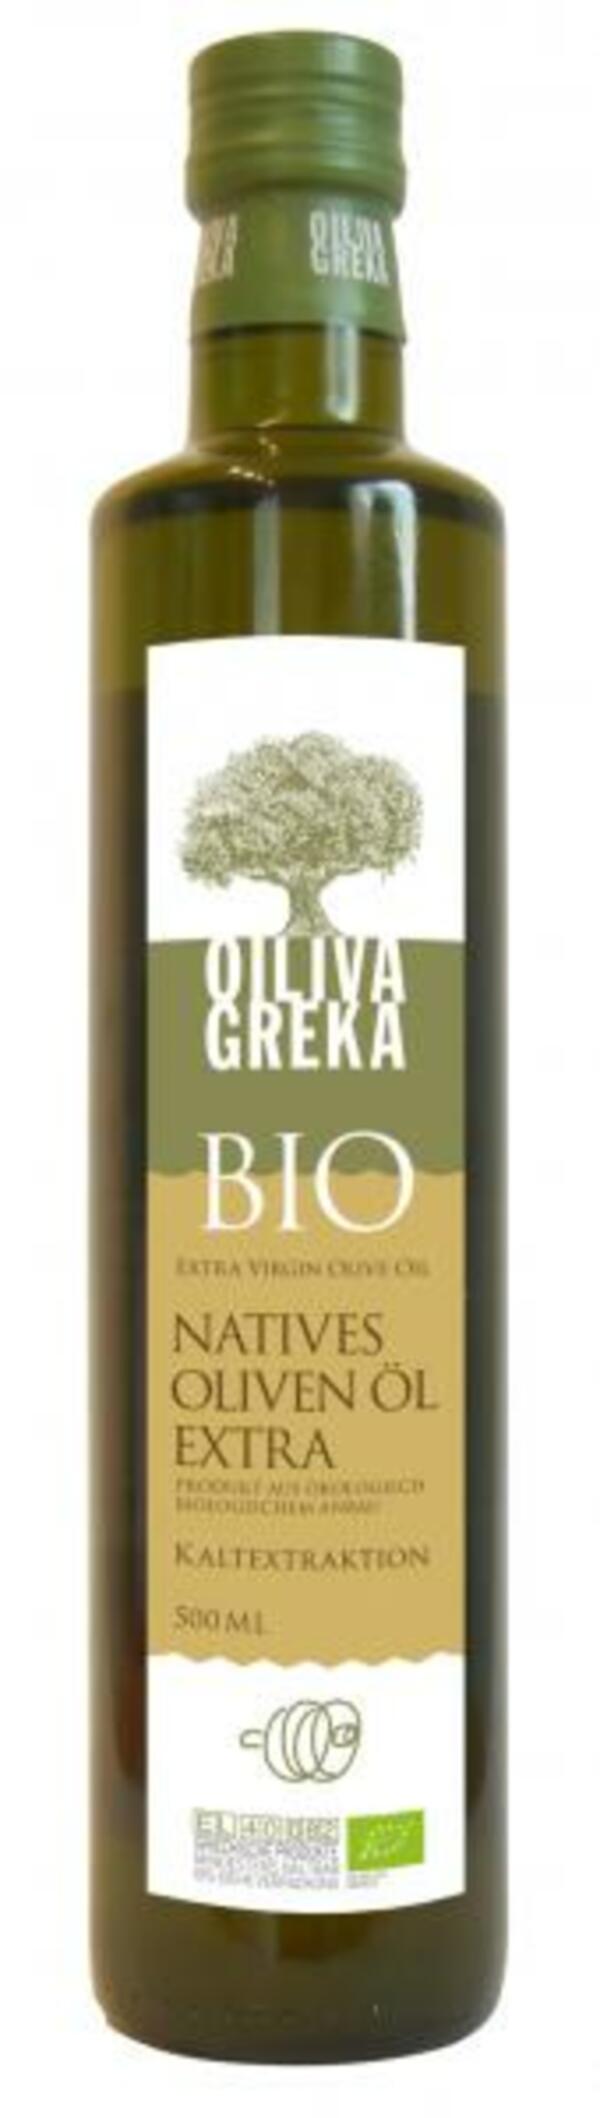 Bild 1 von Oiliva Greka Bio Natives Olivenöl Extra